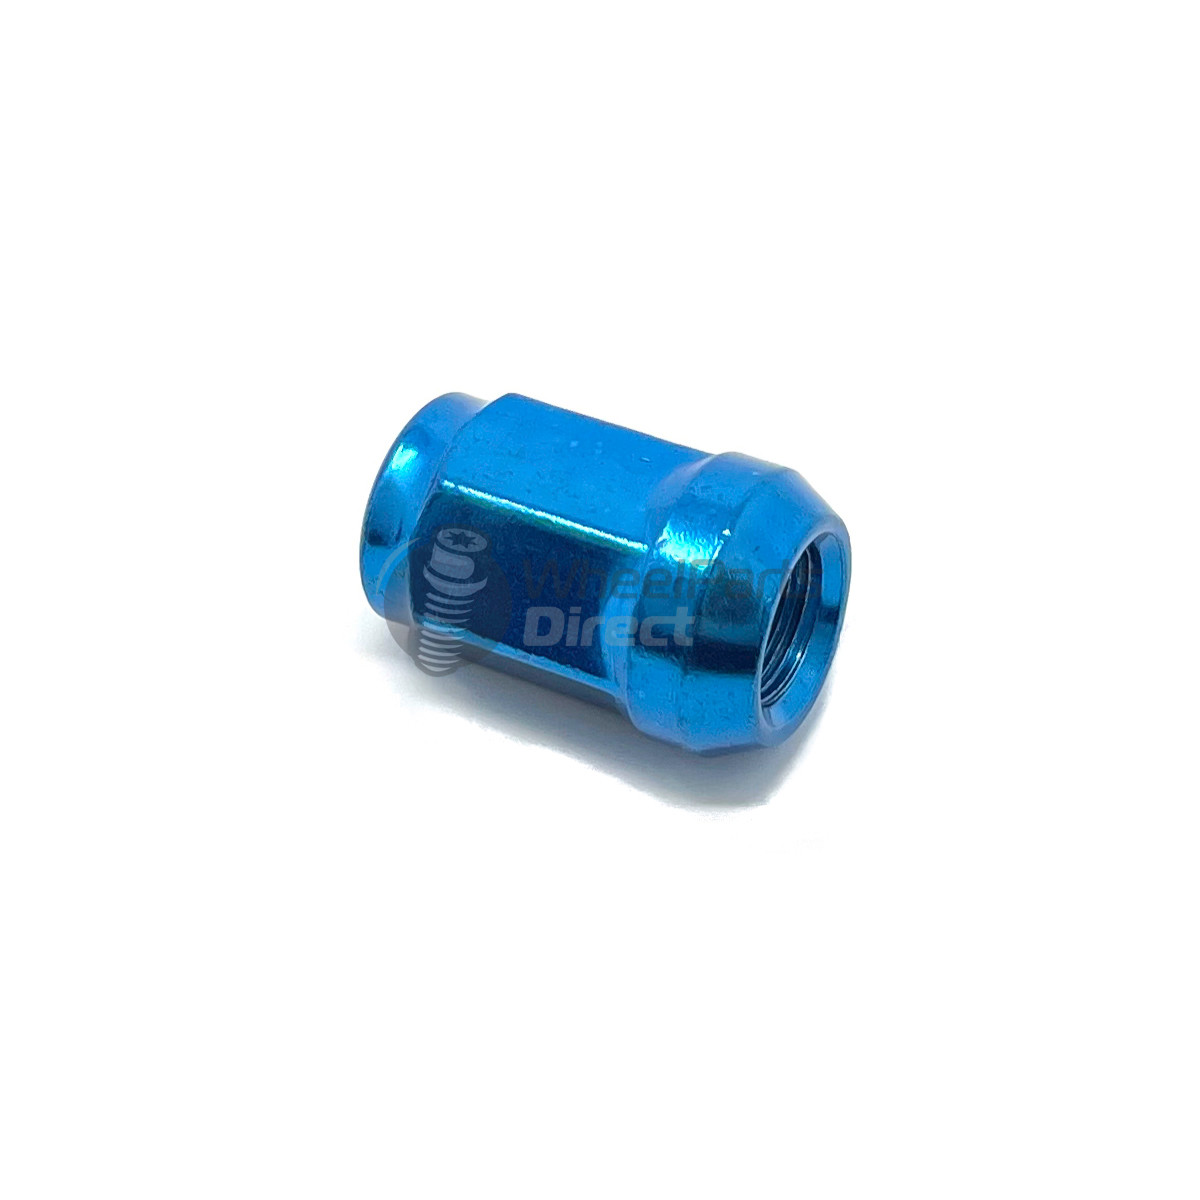 12x1.25mm Tapered 34mm Thread 19mm Hex Blue Wheel Nut